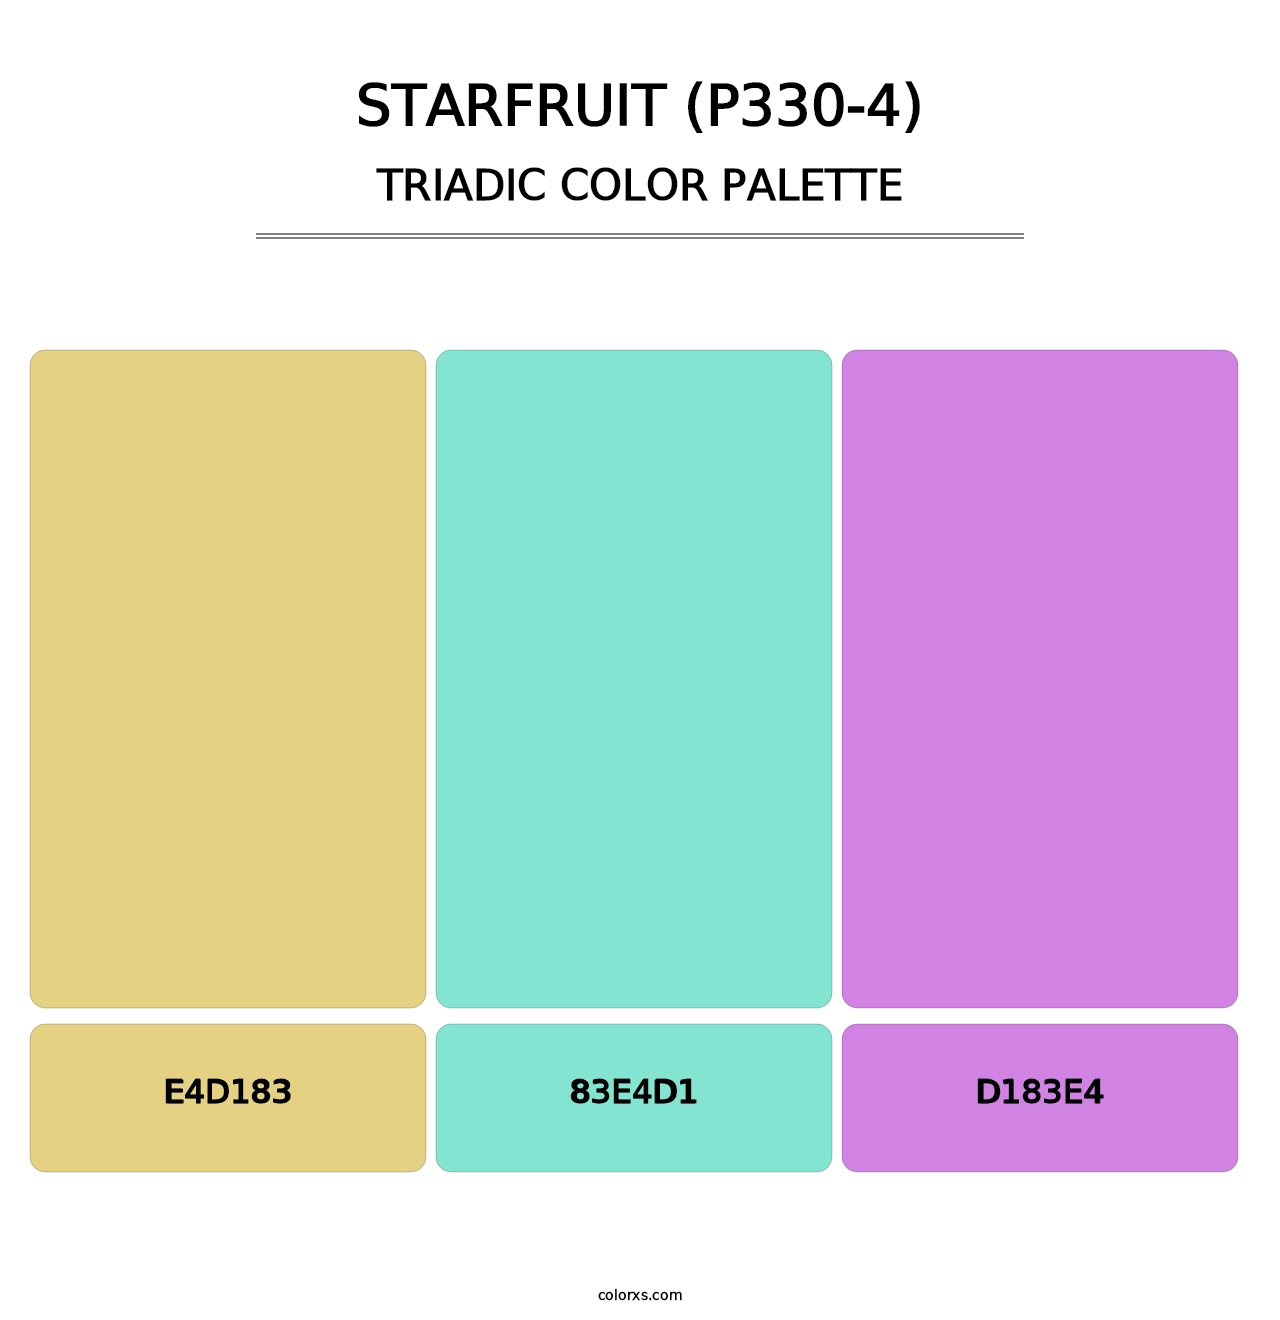 Starfruit (P330-4) - Triadic Color Palette